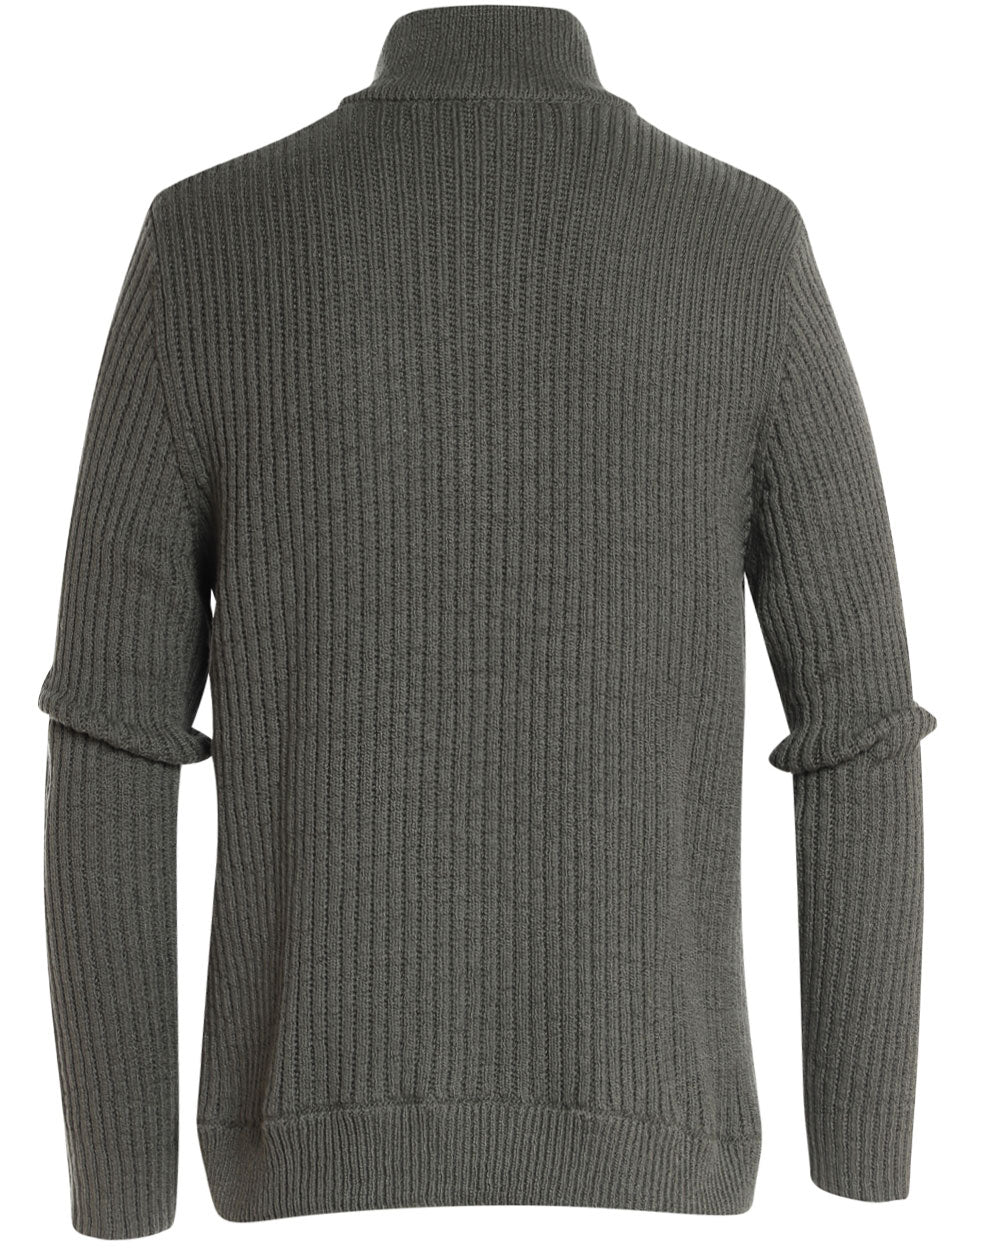 Brioni Olive Green Knit Cotton Sweater – Stanley Korshak